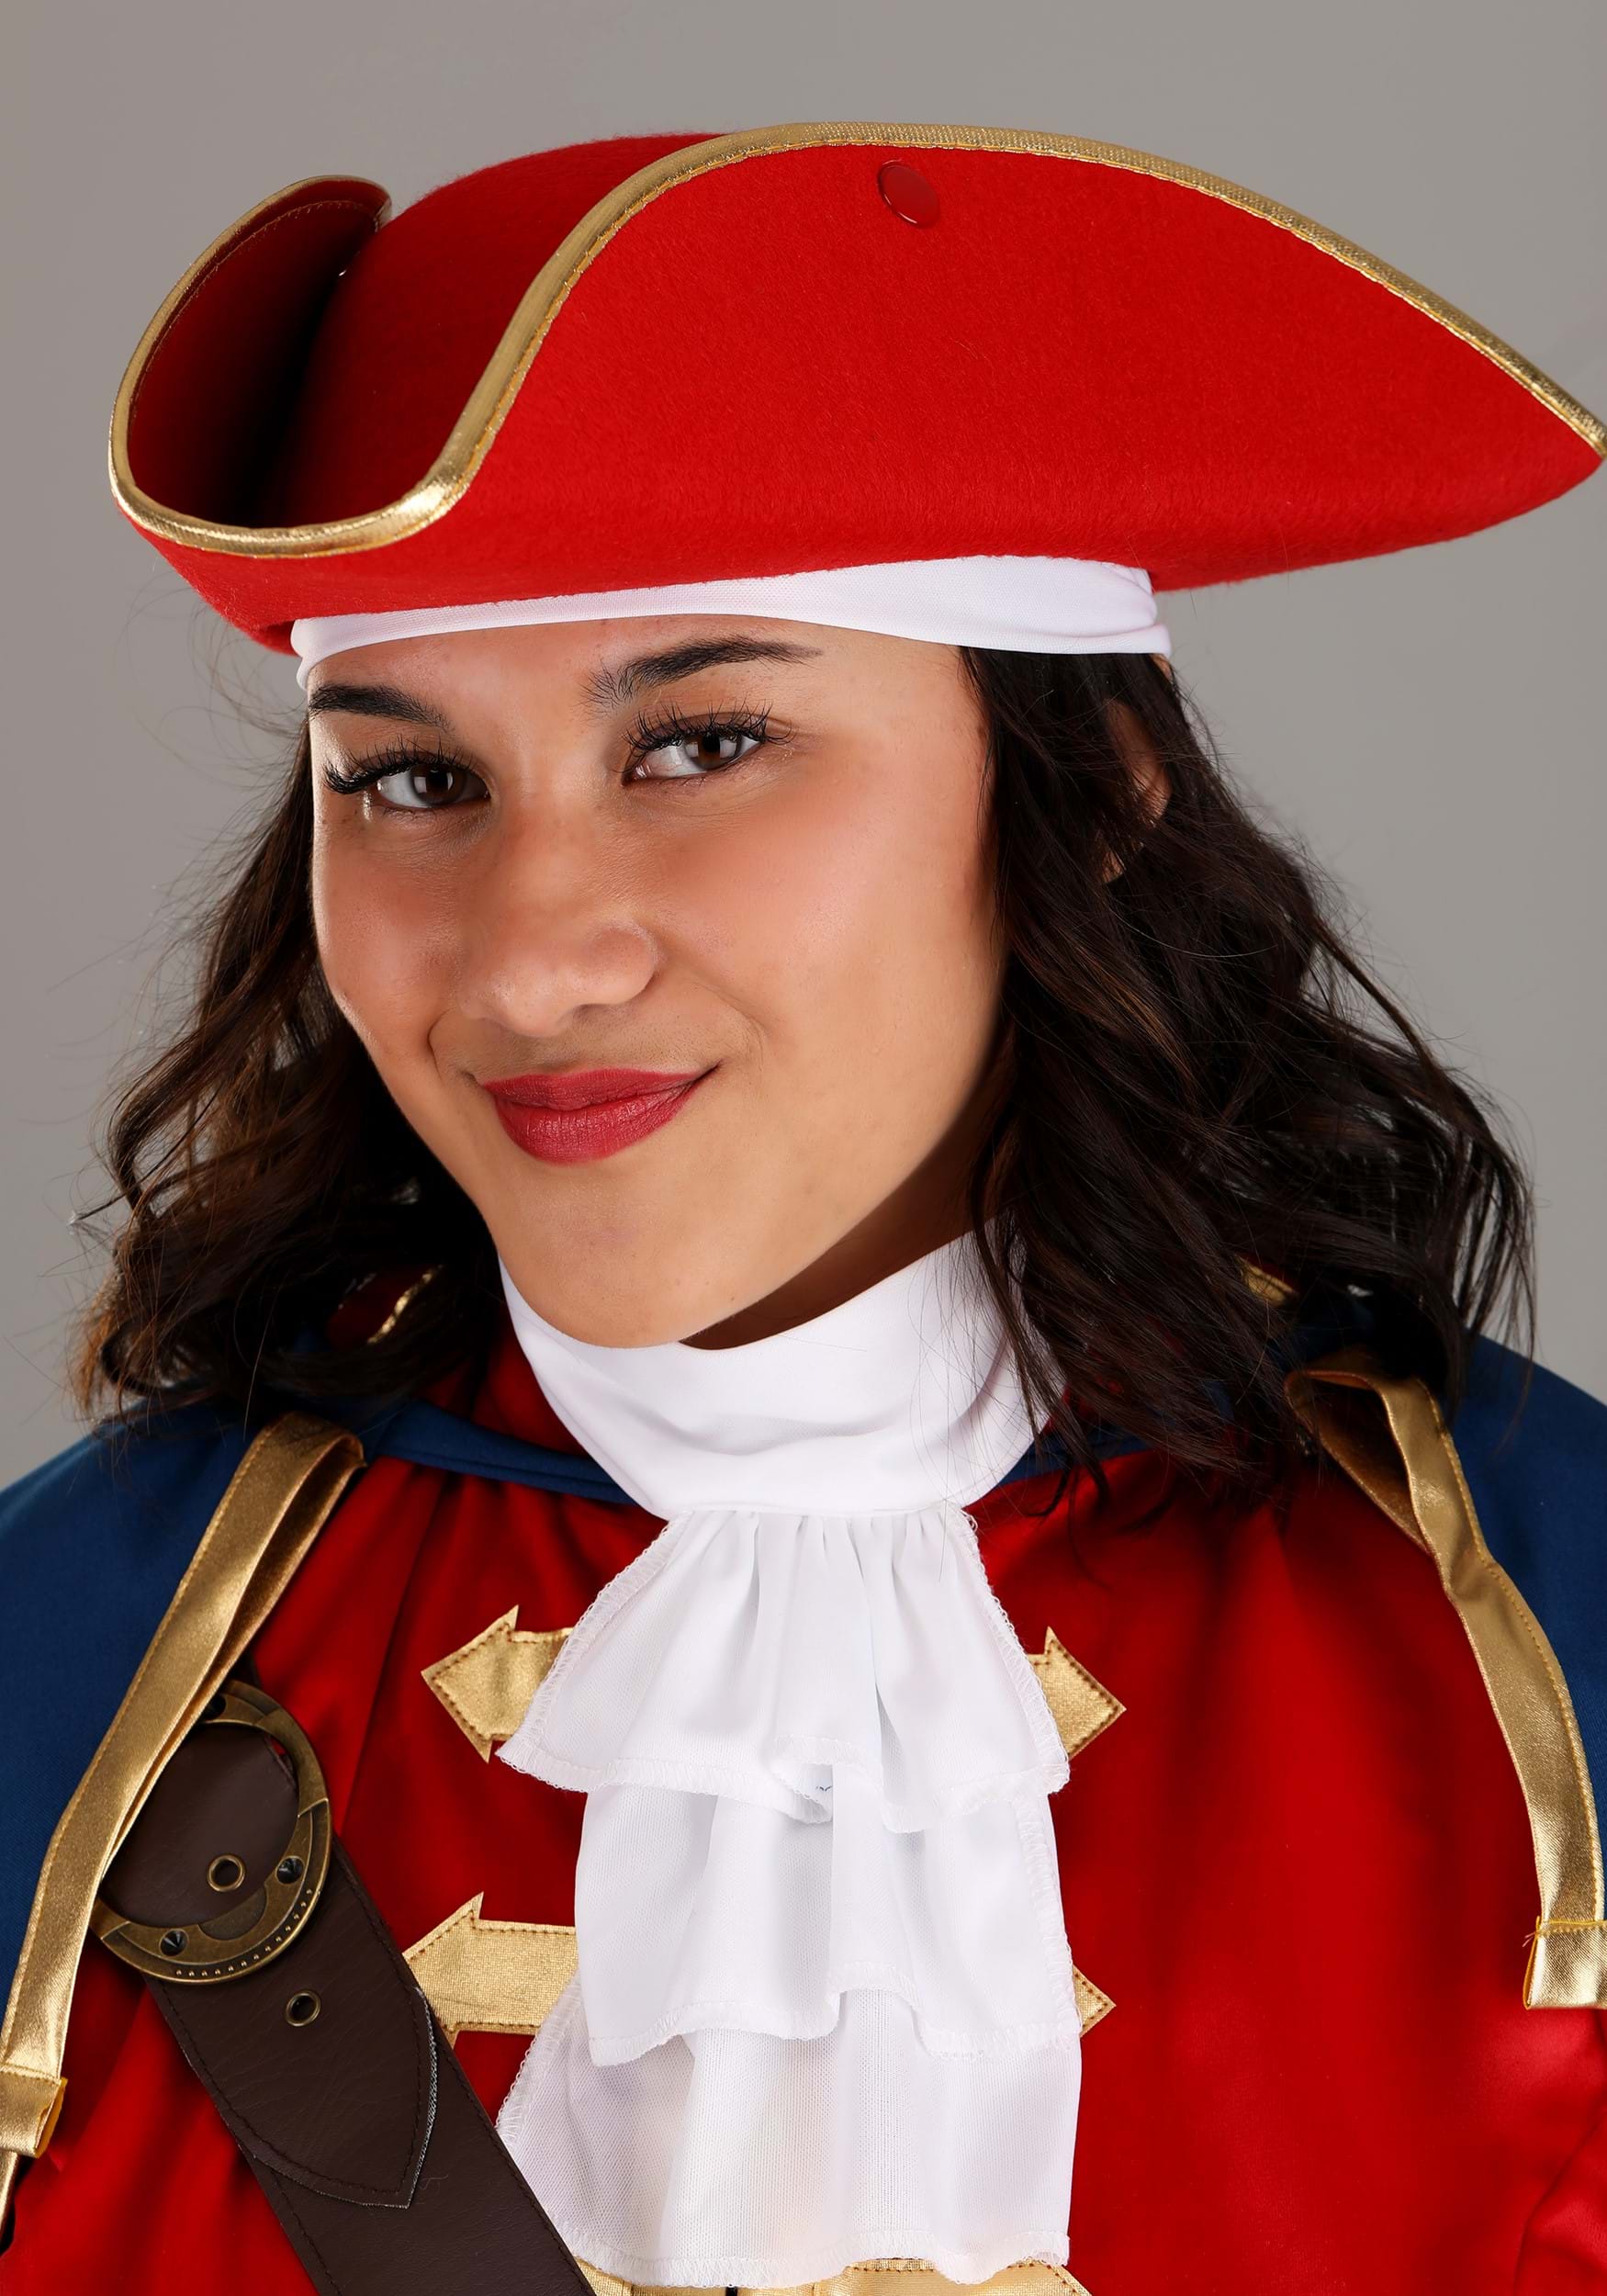 Captain Pirate Women's Plus Size Costume